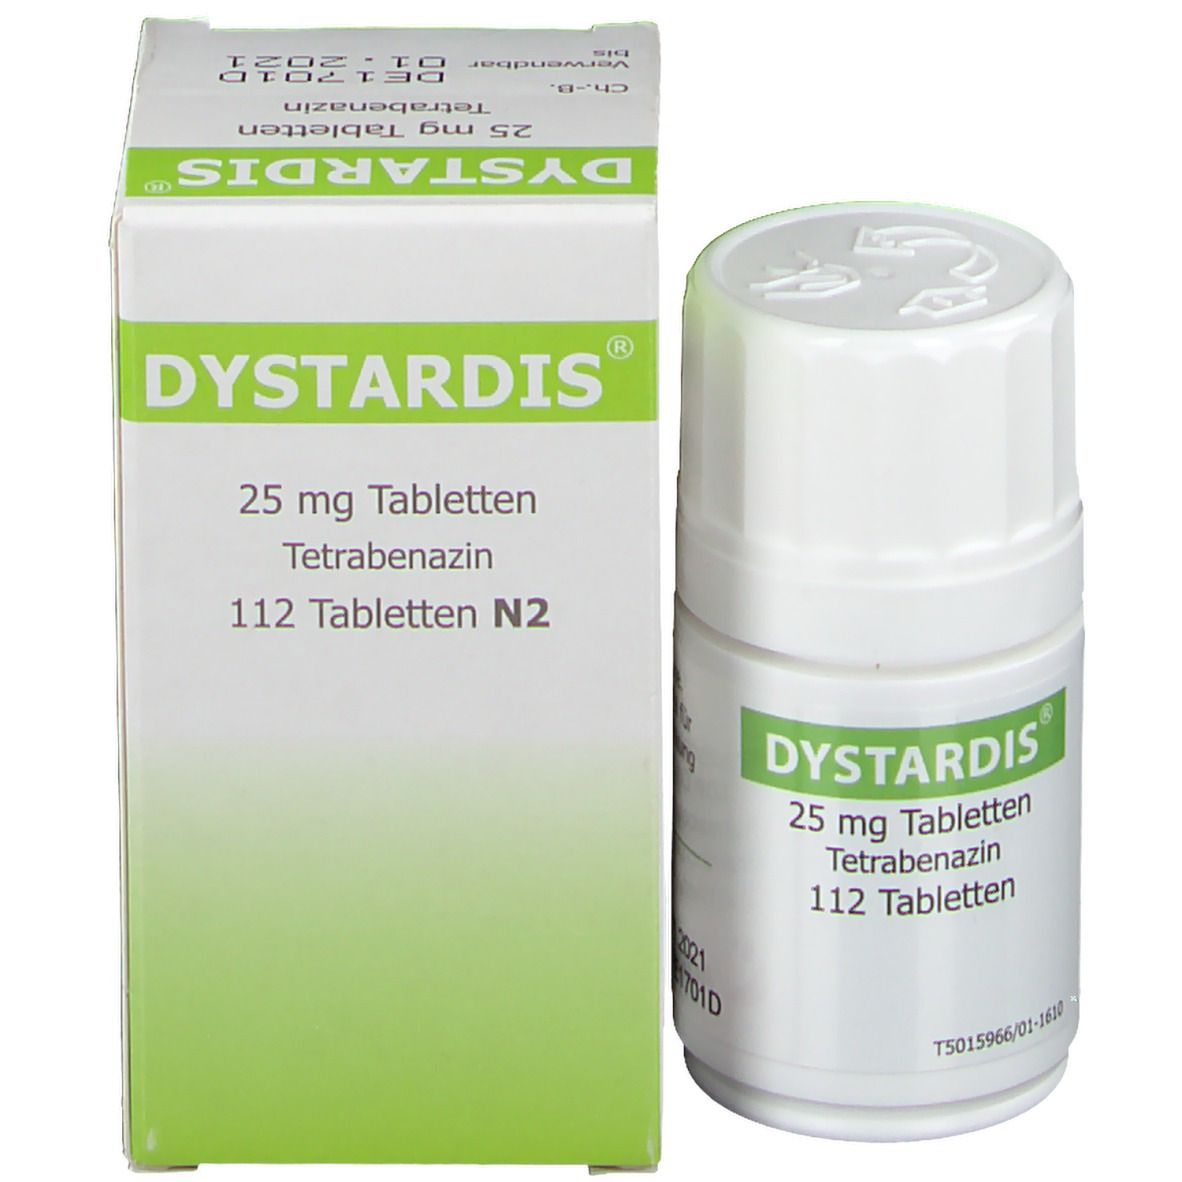 DYSTARDIS® 25 mg